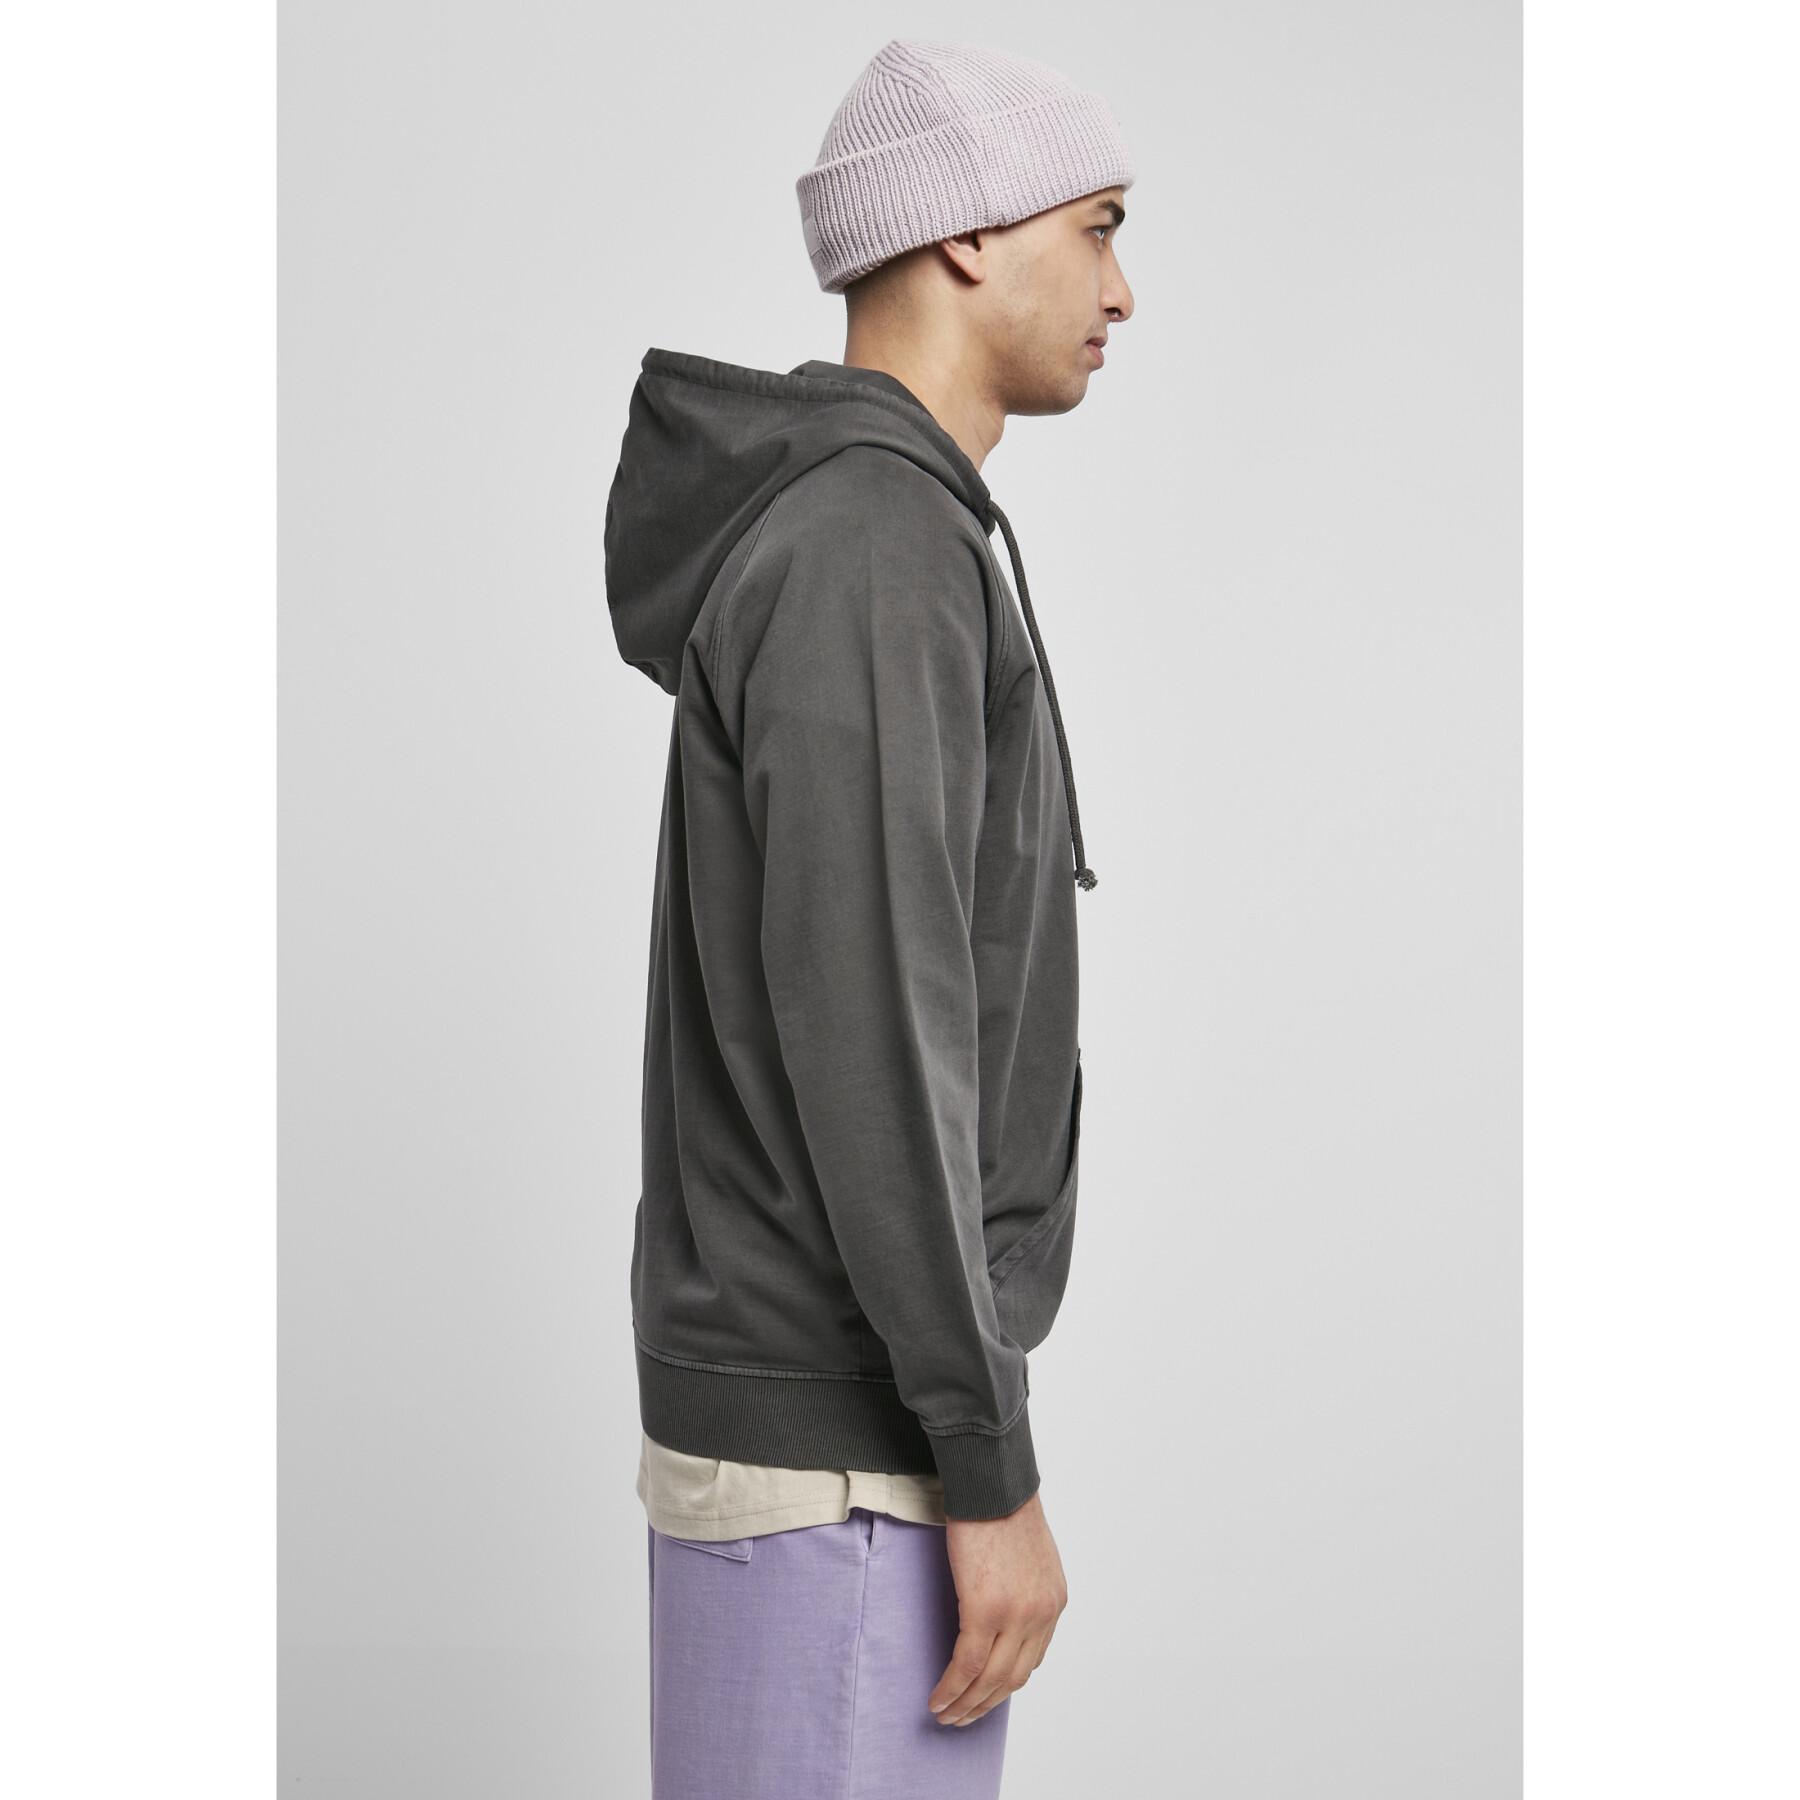 Hooded sweatshirt Urban Classics overdyed